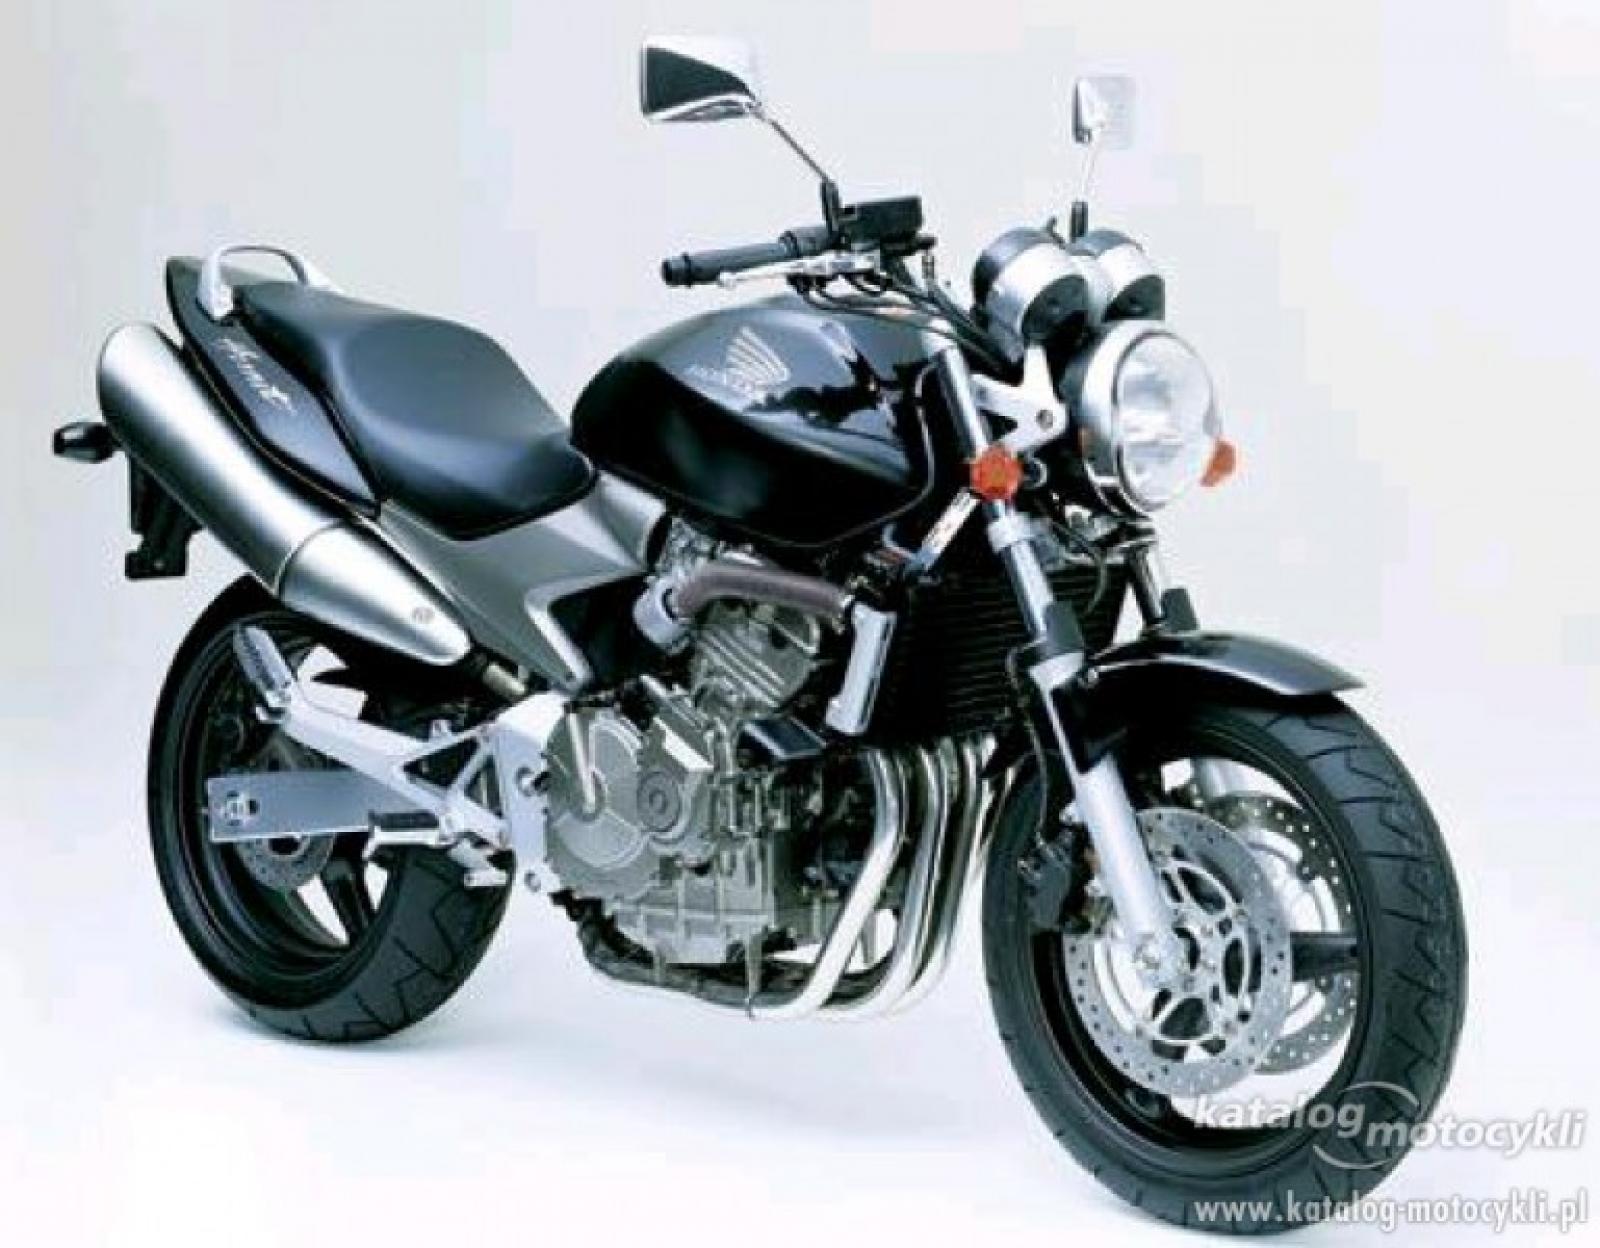 Мотоцикл honda hornet. Honda cb600f Hornet 2003. Honda CB 600 Hornet. Honda CB 600 Hornet 2003. Honda Hornet 2003.